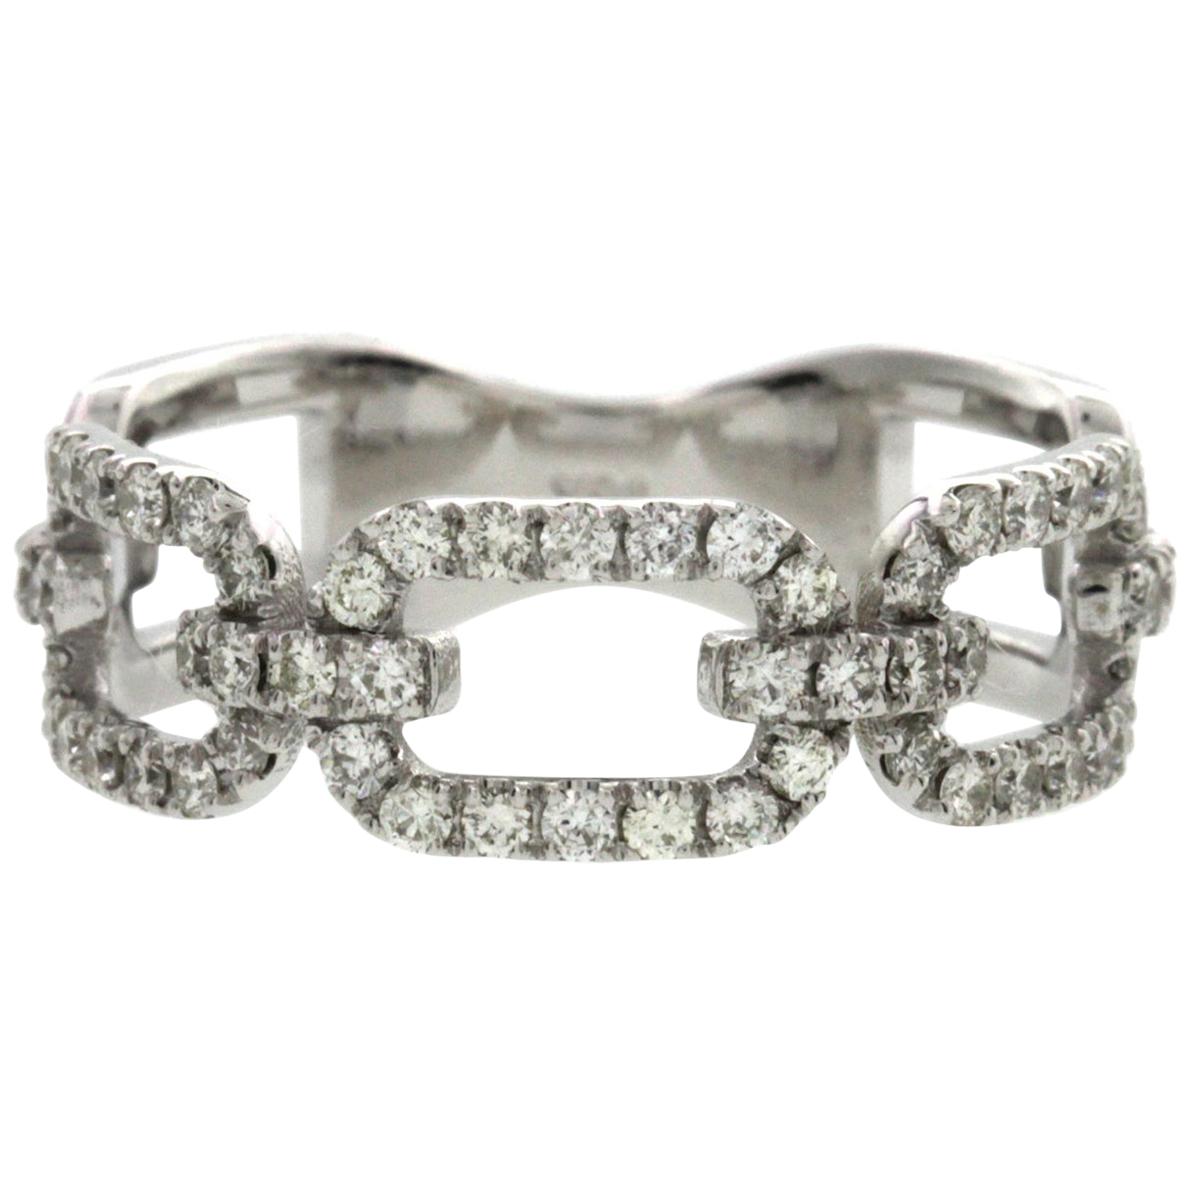 Fancy Link Chain 14 Karat White Gold 0.58 Carat Diamonds Wedding Band Ring